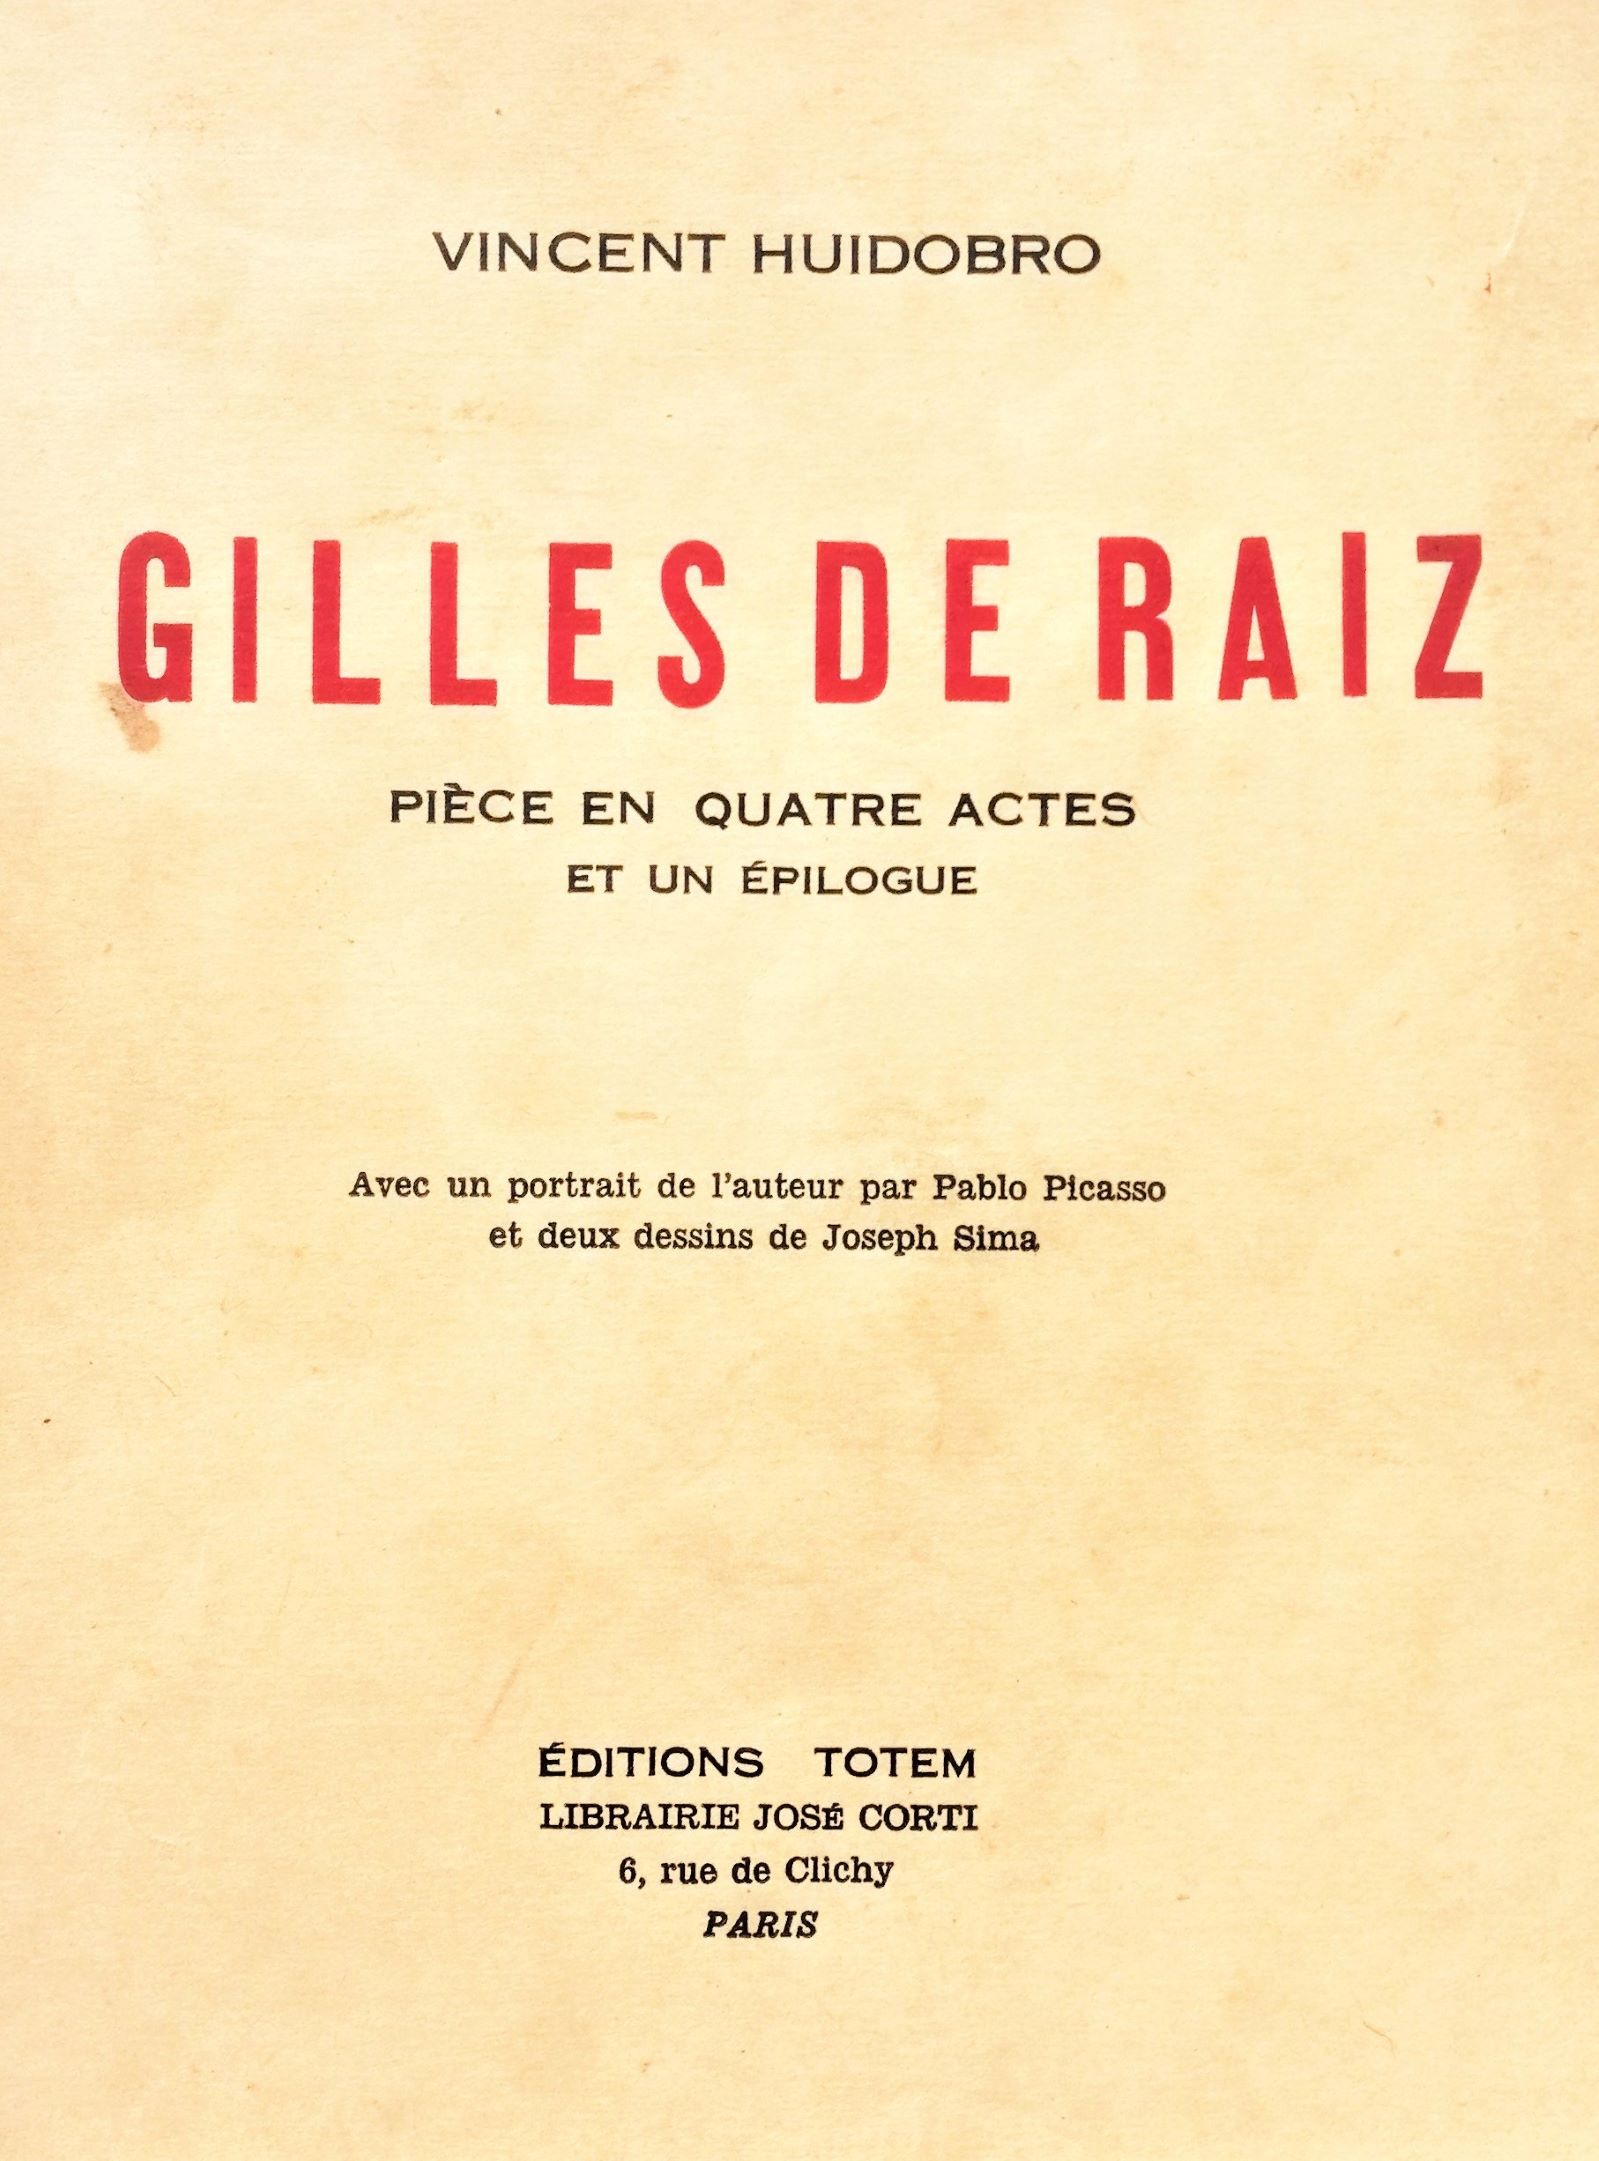 Vicente Huidobro - Gilles de Raiz